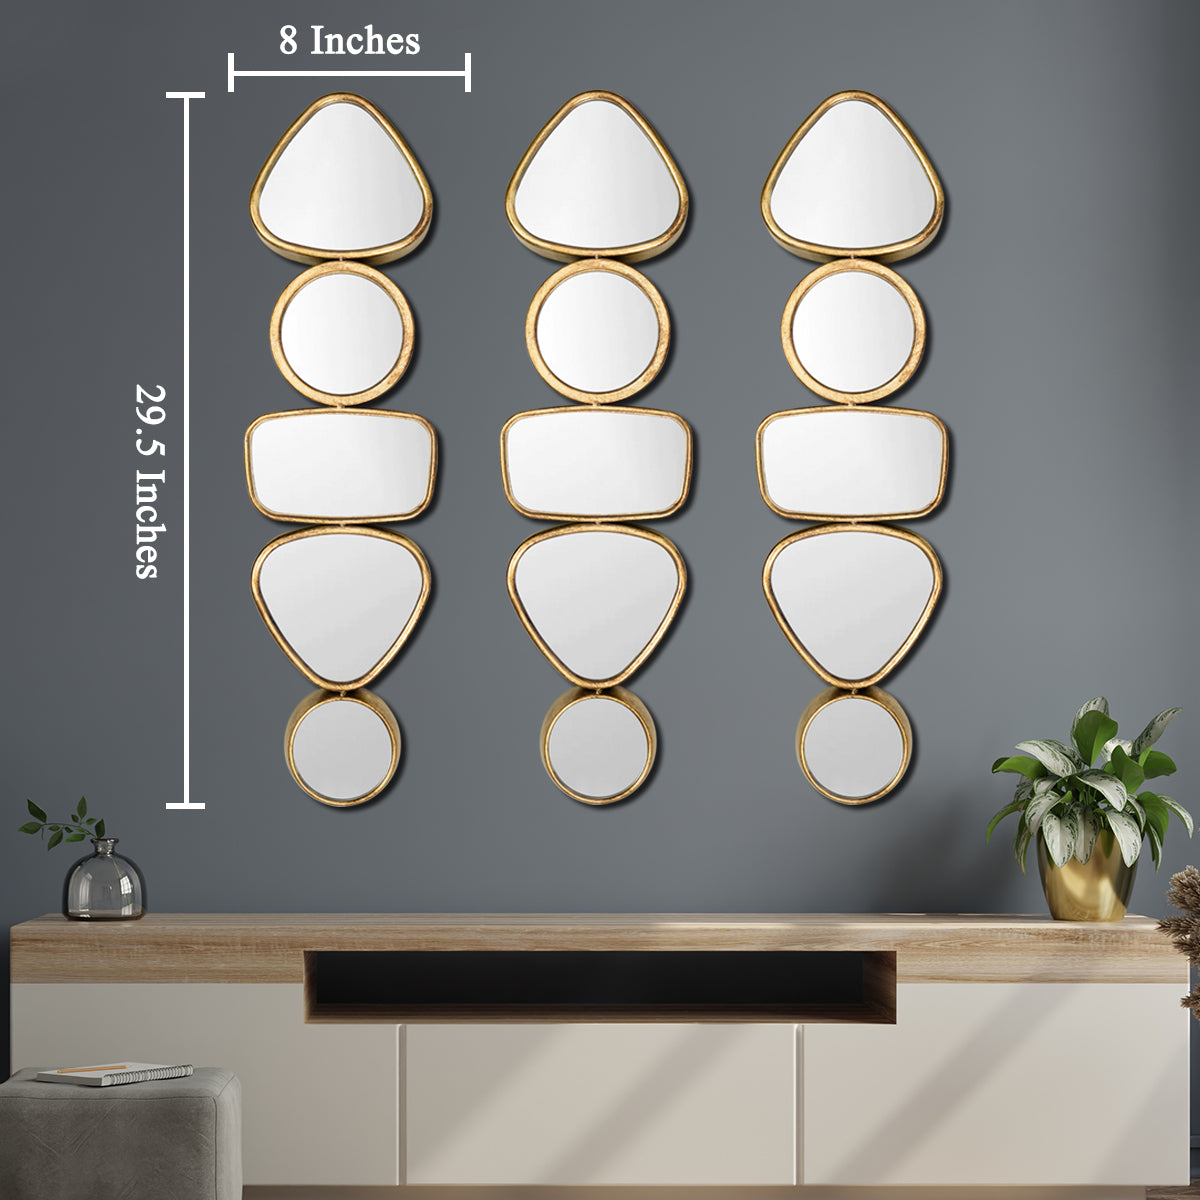 The Splendidly Radiant Decorative Wall Mirror - Set of 3